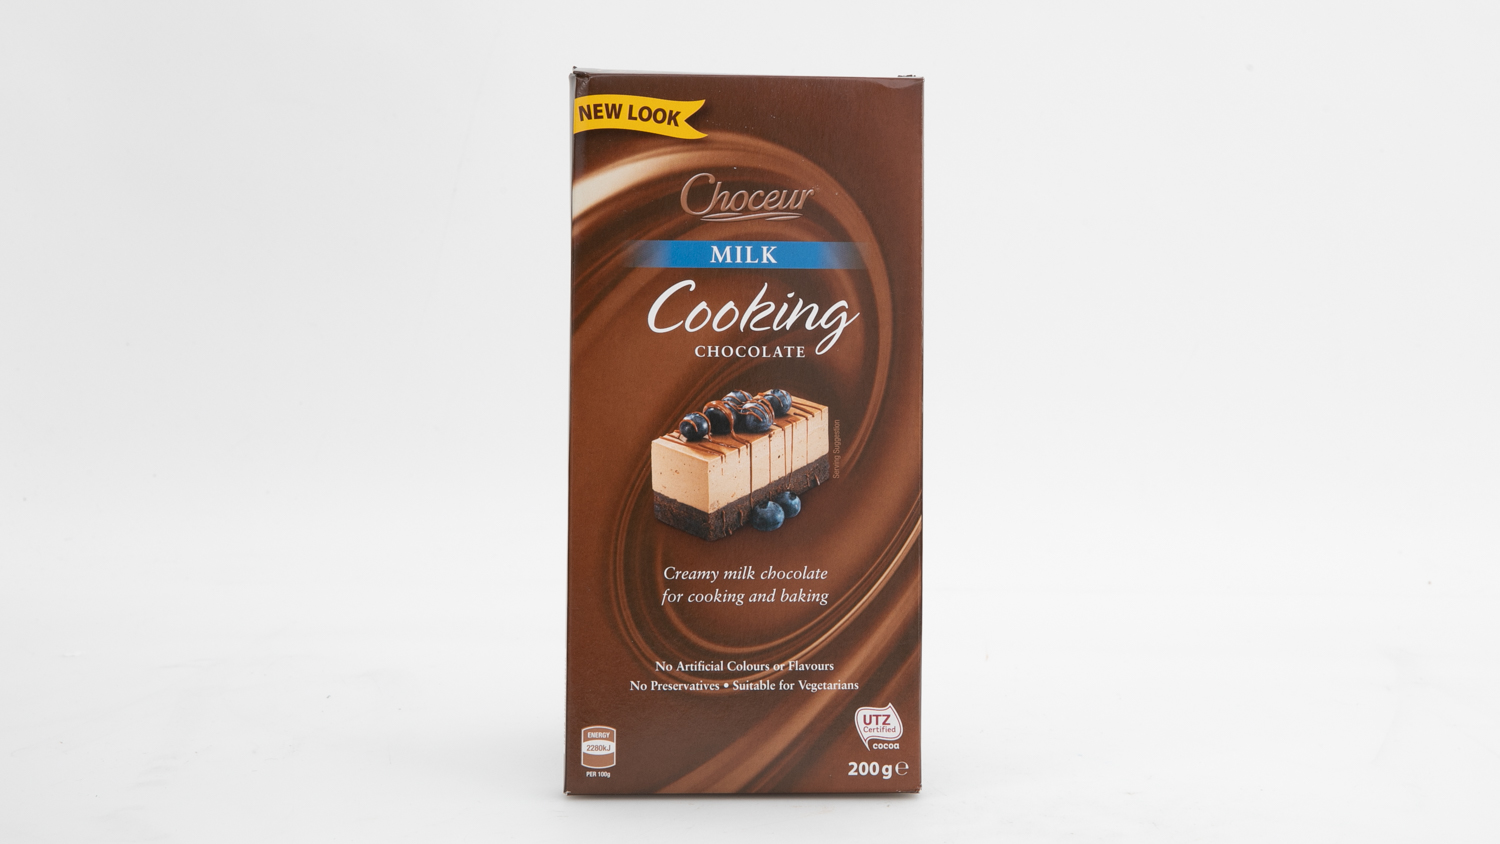 Aldi Choceur Milk Cooking Chocolate carousel image